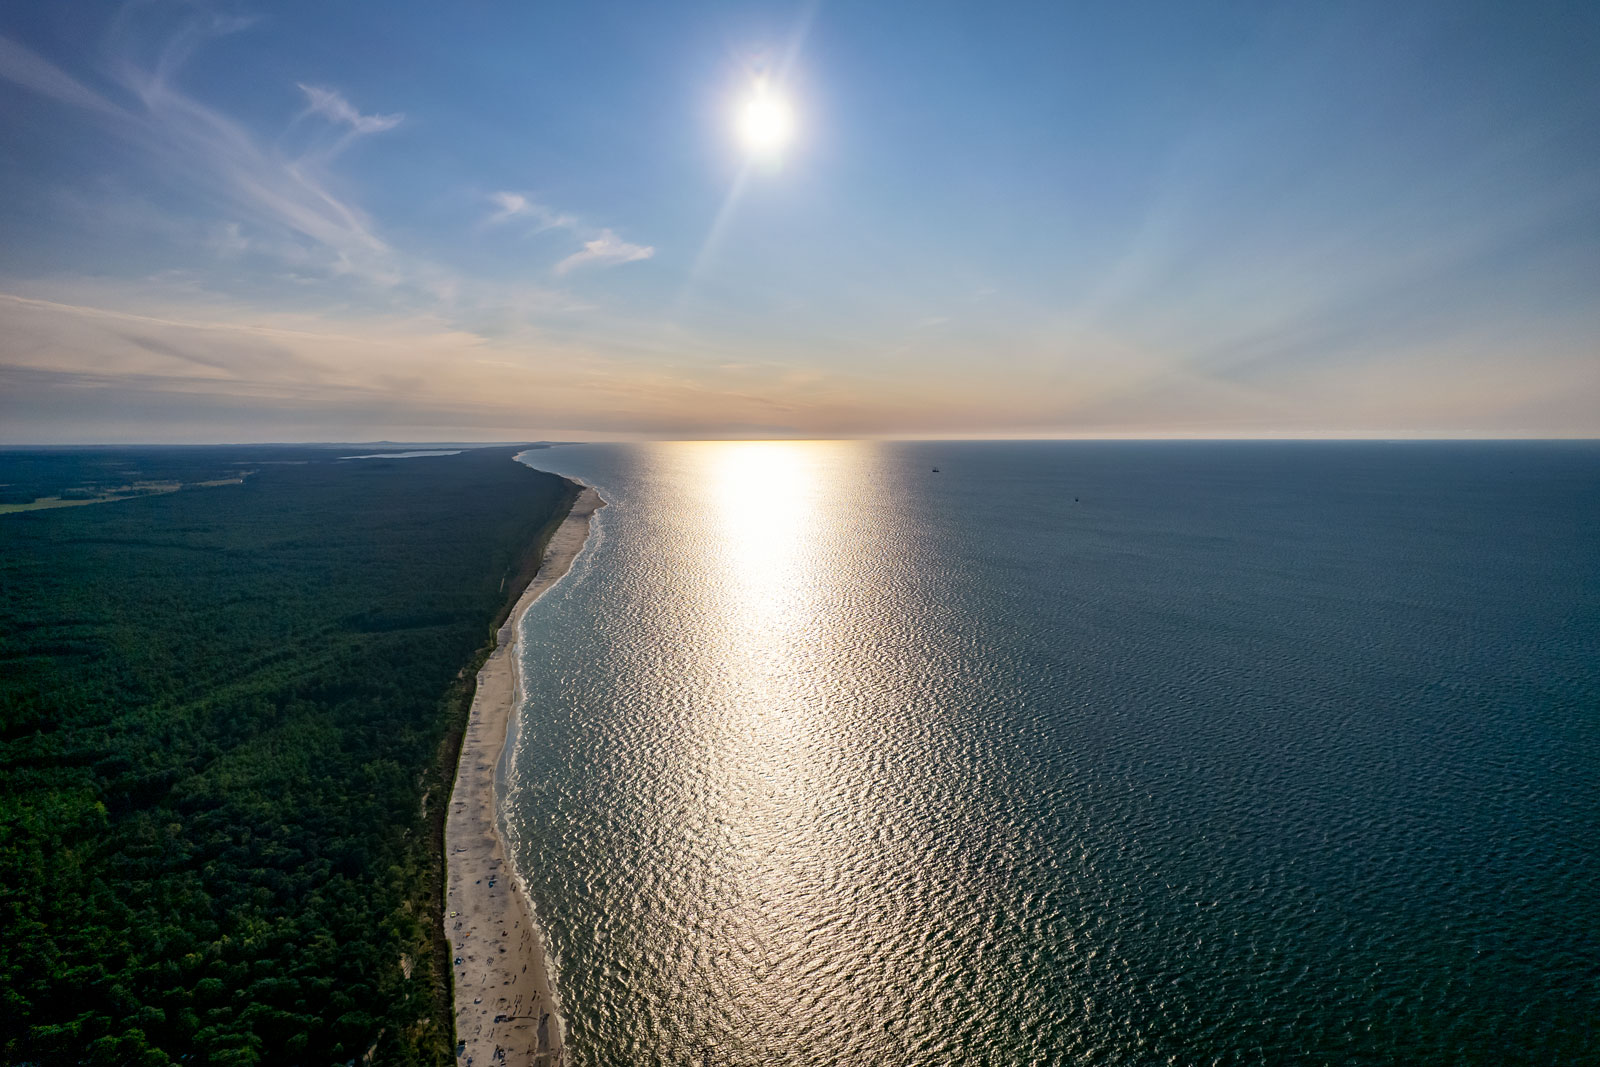 Baltic coast